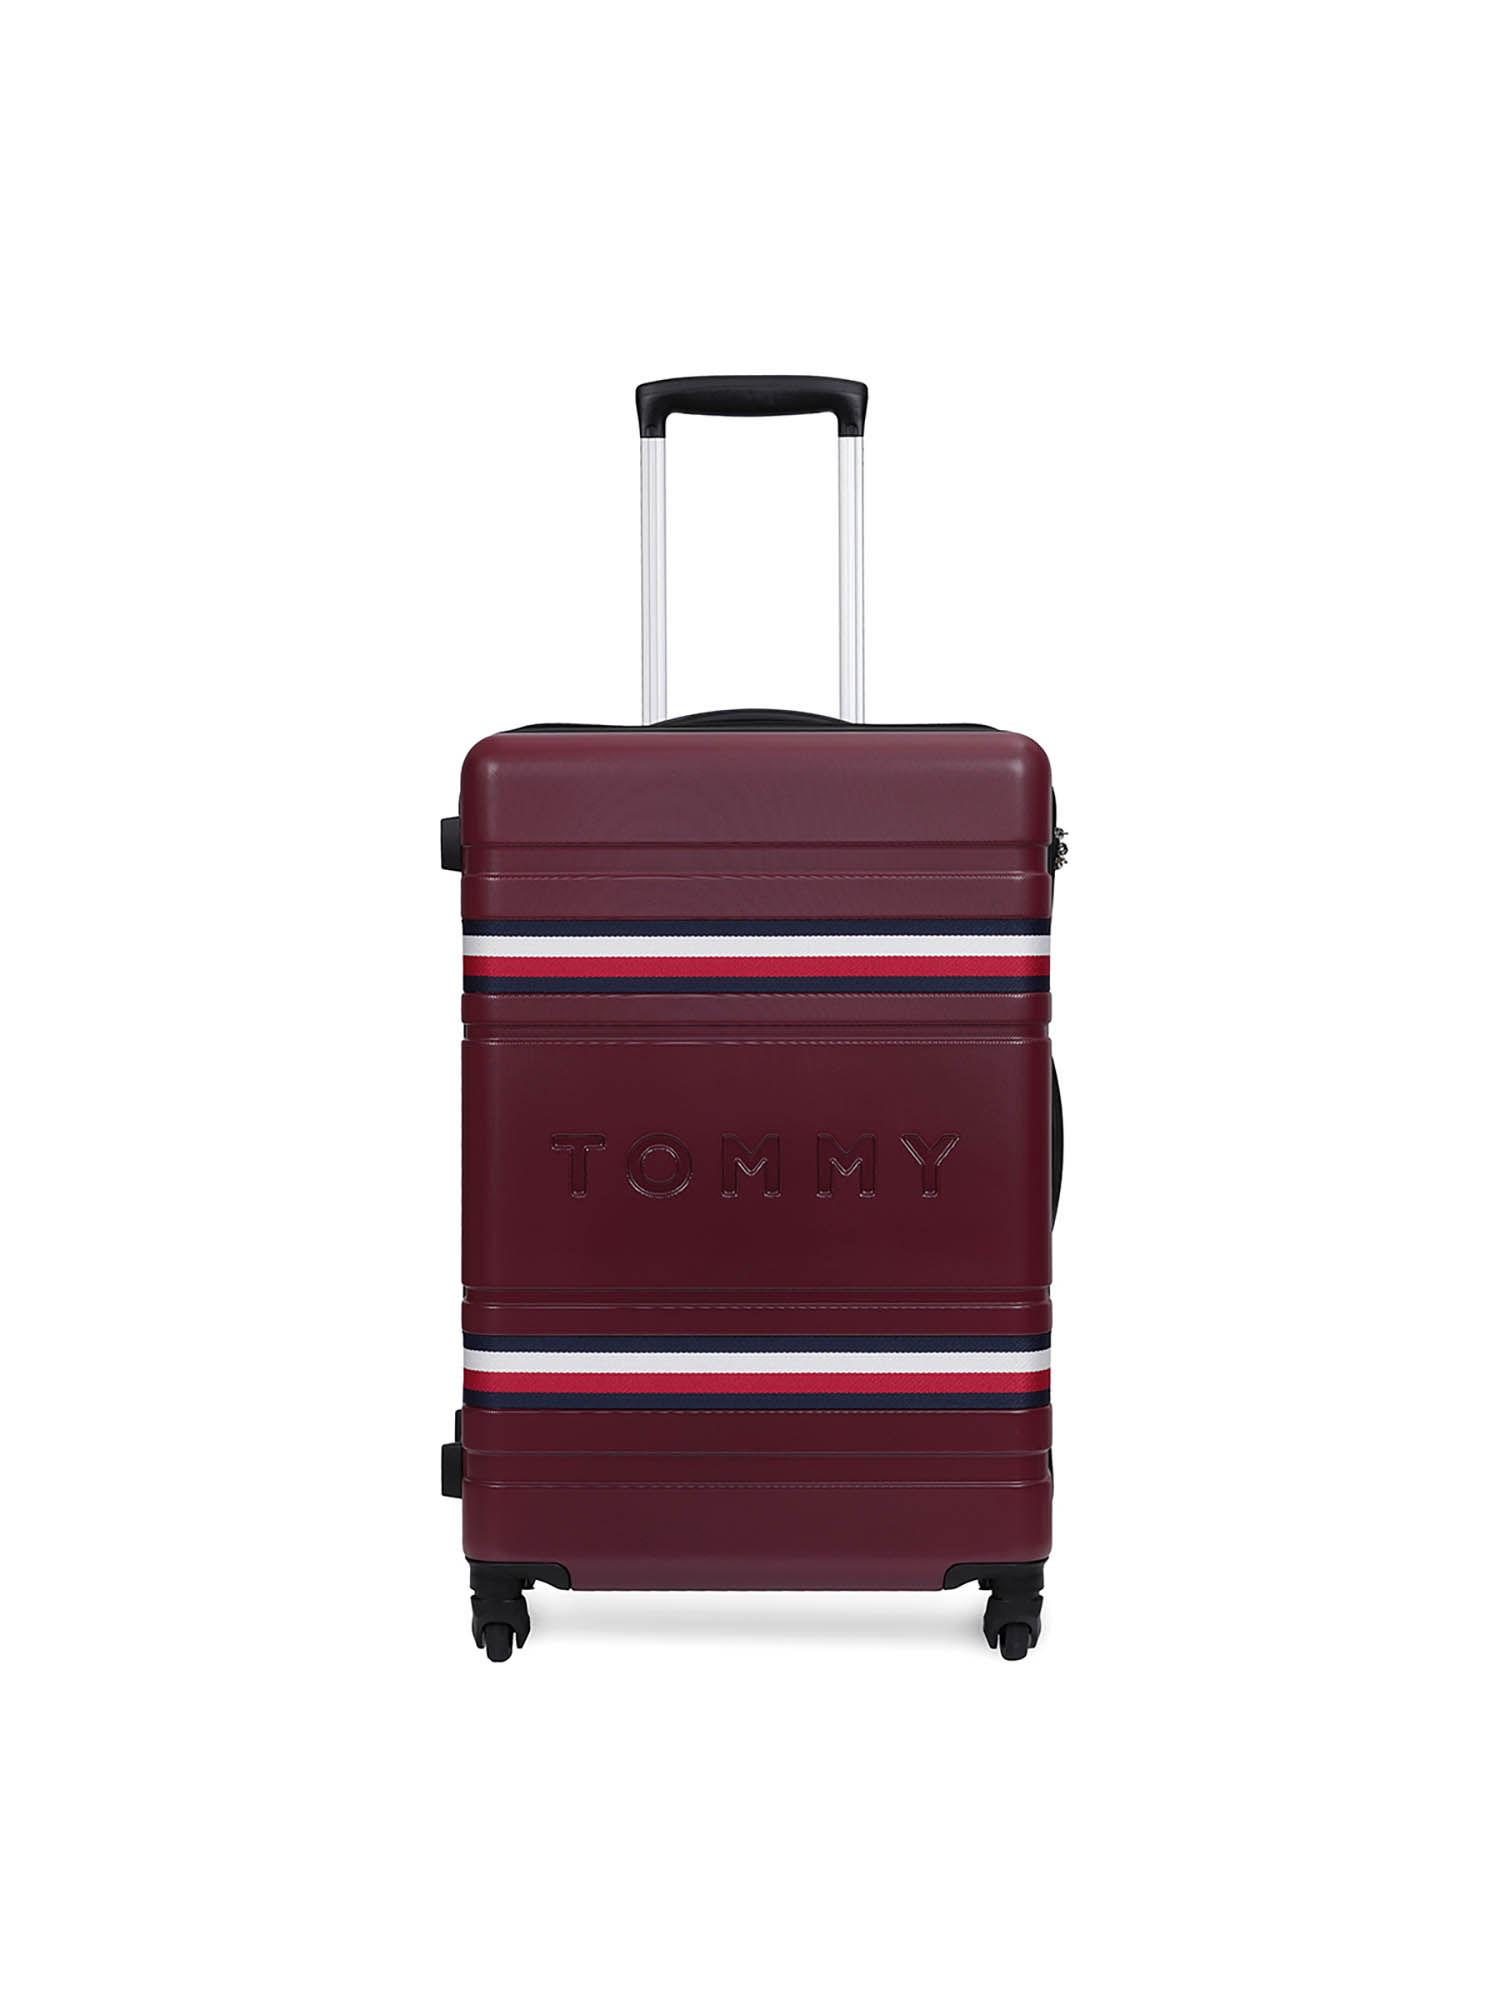 unisex berlin hard luggage trolley bag - wine, 57 cm cabin